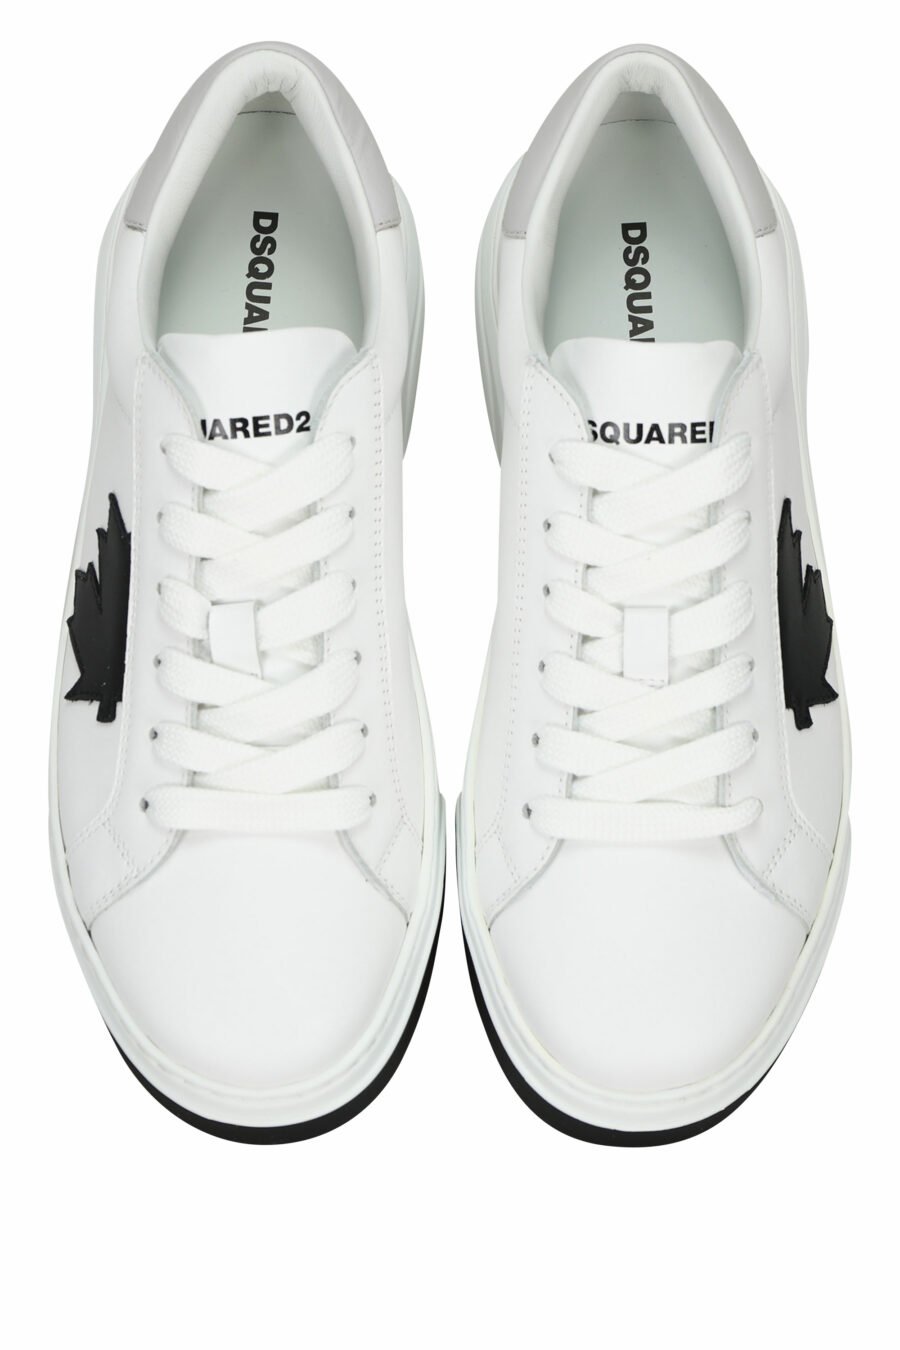 Sapatilhas brancas com mini-logotipo preto e sola bicolor - 805777319321 4